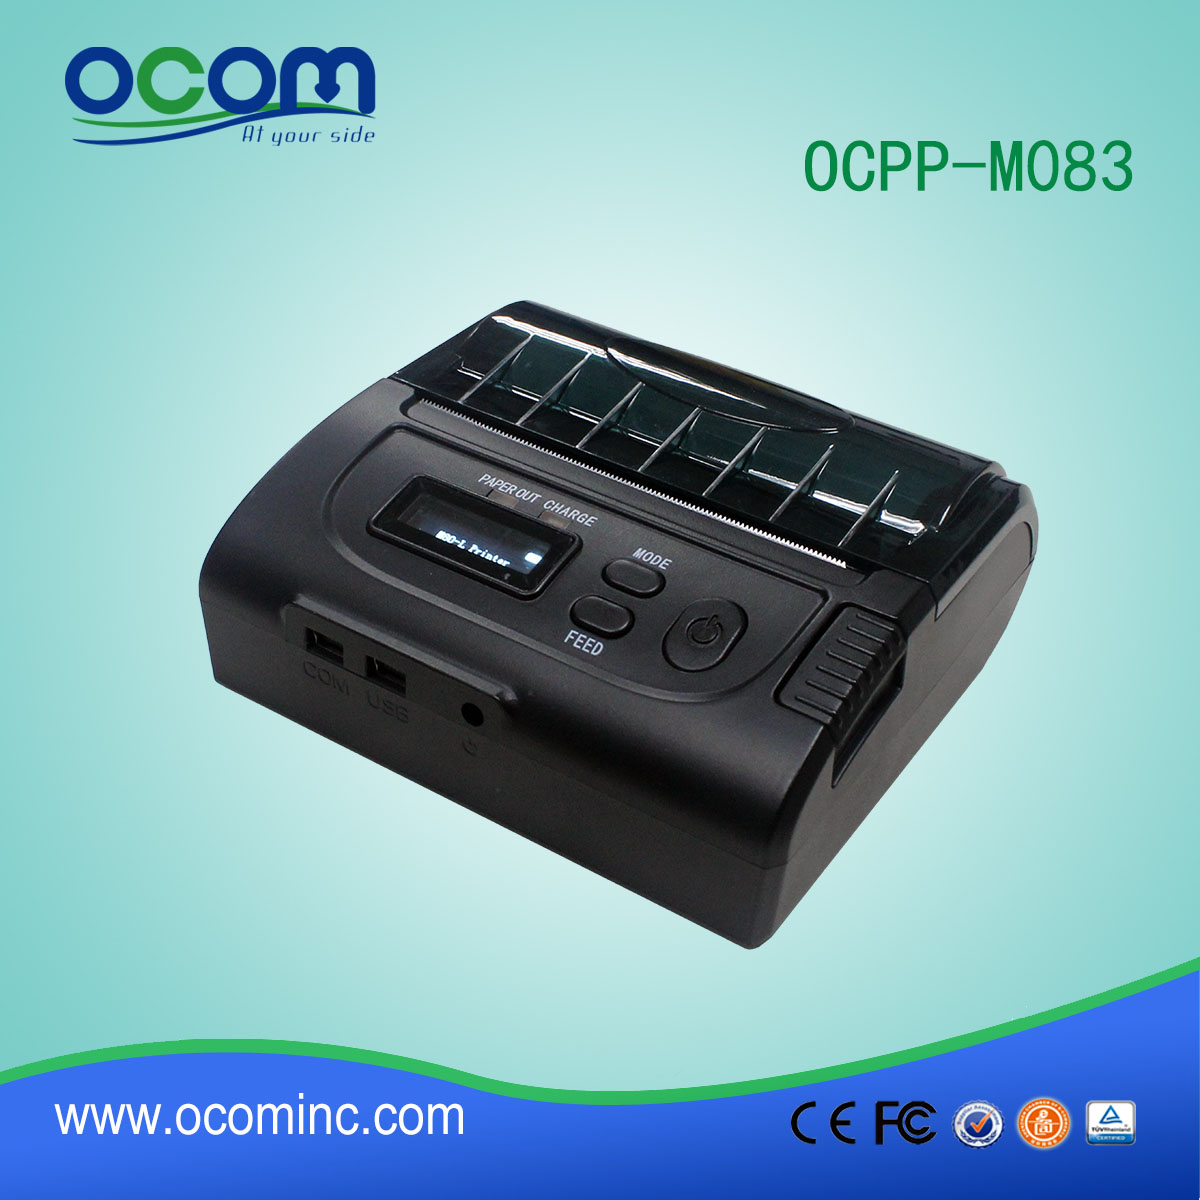 OCPP-M083 прямого теплового андроид портативный принтер usb термопринтер